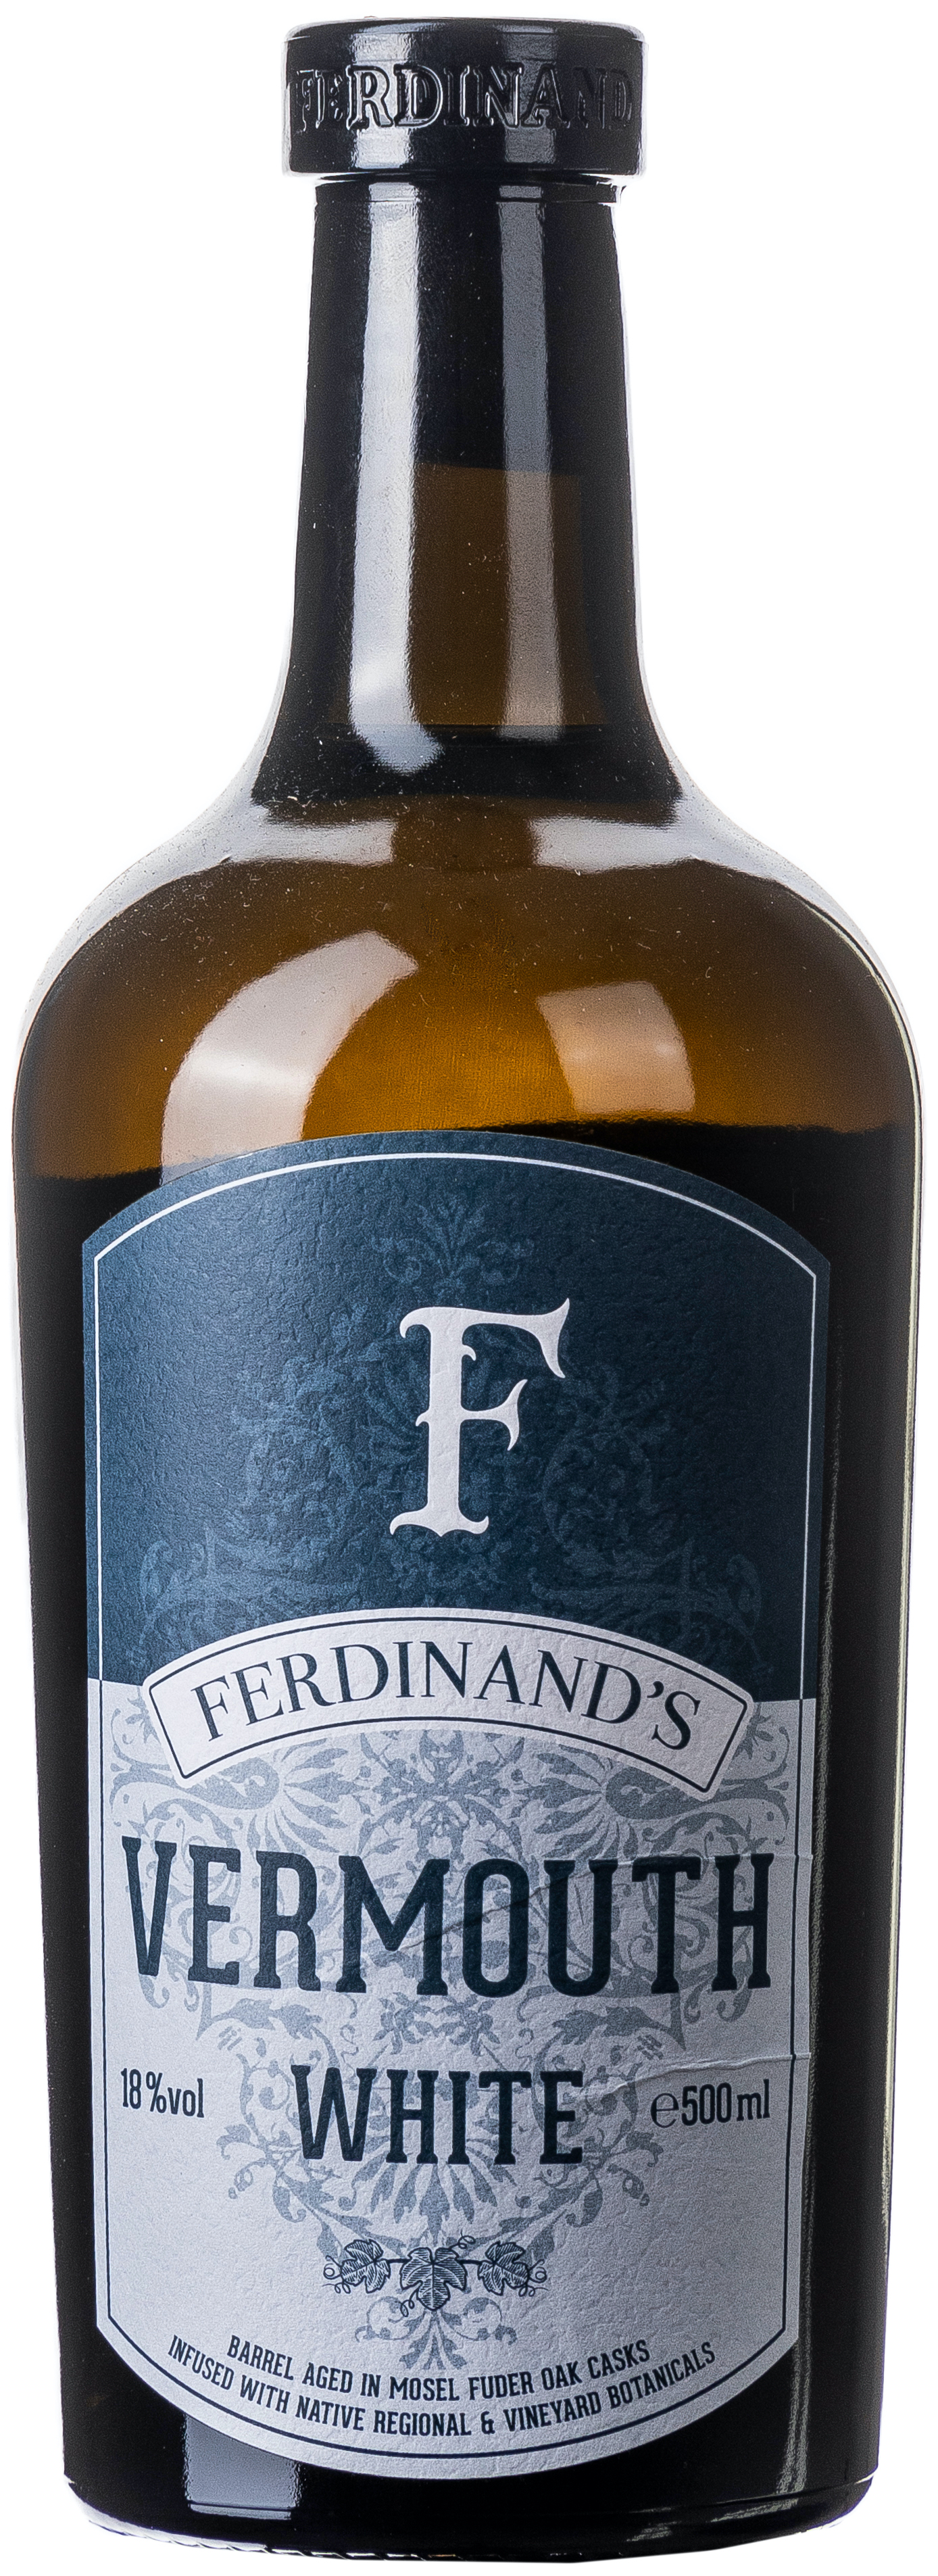 Ferdinand's Vermouth White 18% vol. 0,5L